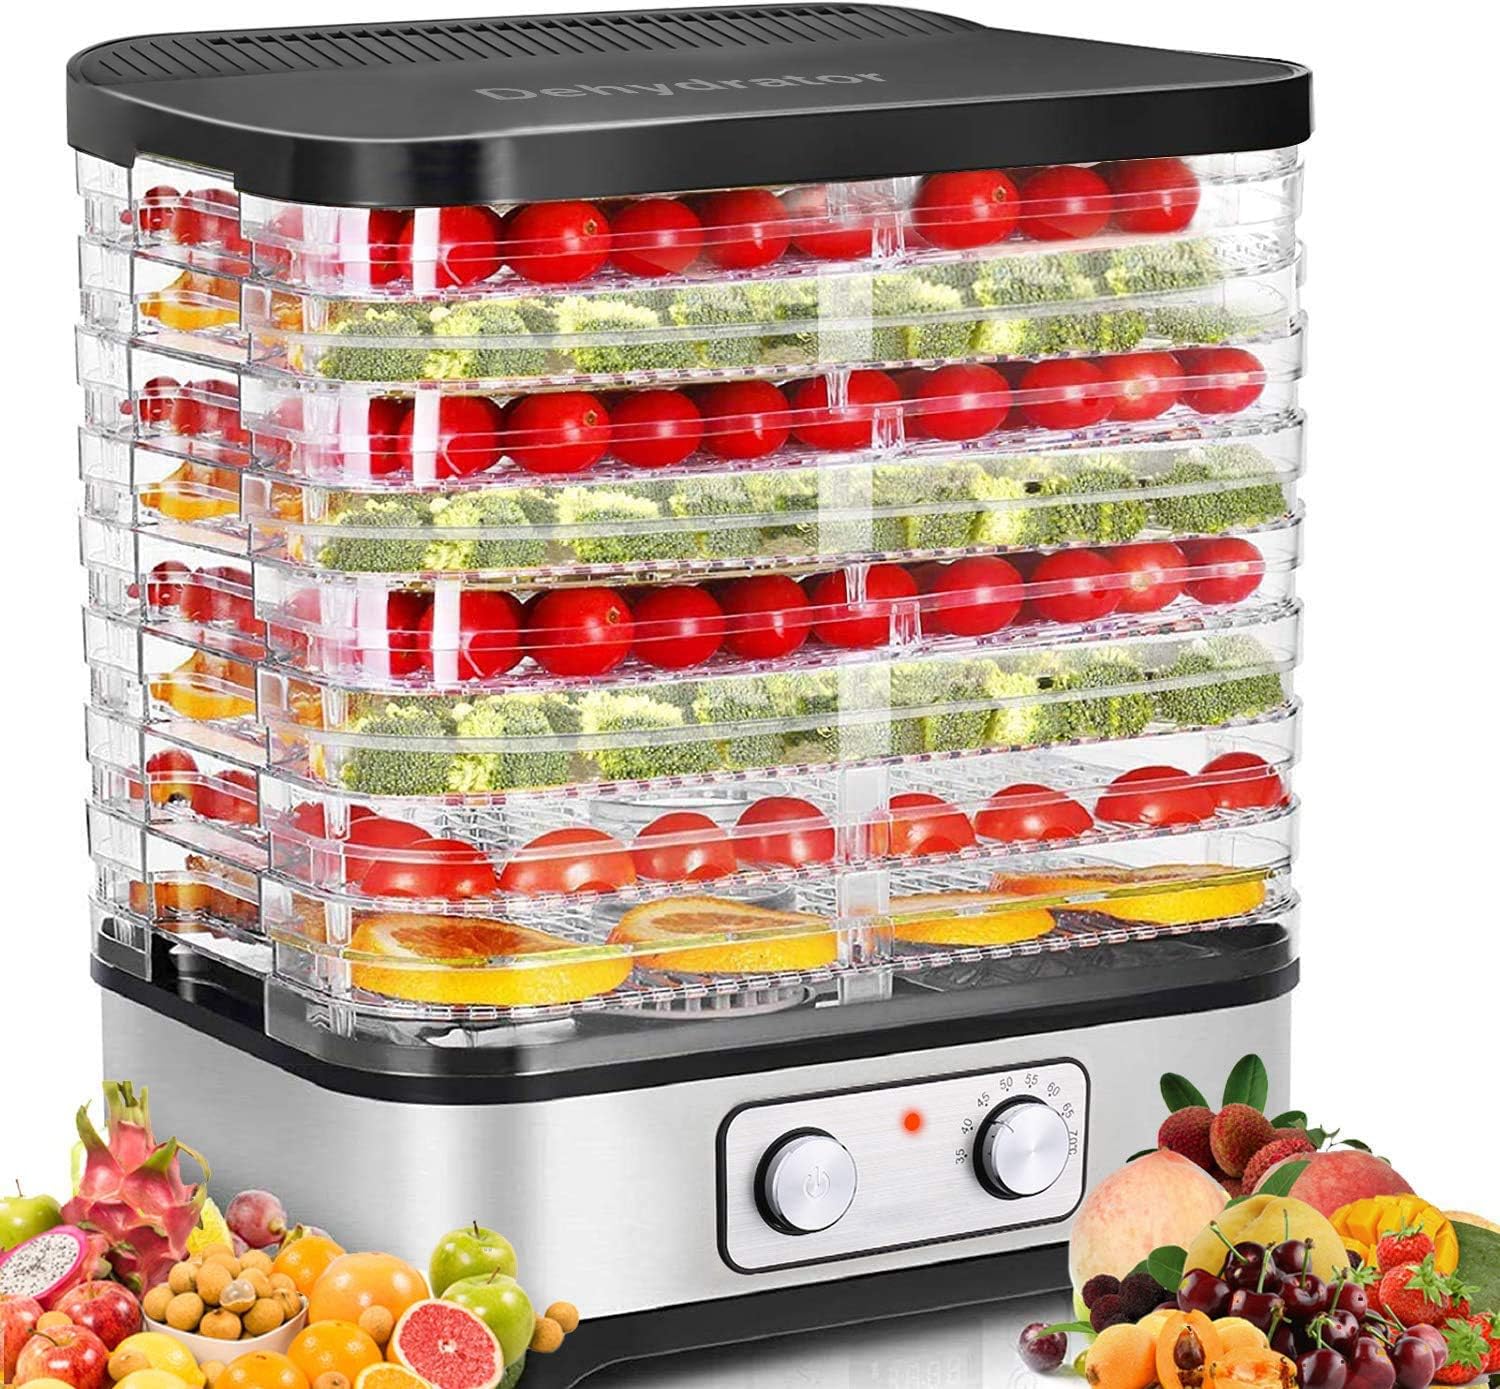 Homdox Food Dehydrator Machine,8-Tray Fruit Dehydrator with Temperature Control Knob Button for Meat/Fruit/Vegetable,400 Watt,BPA Free